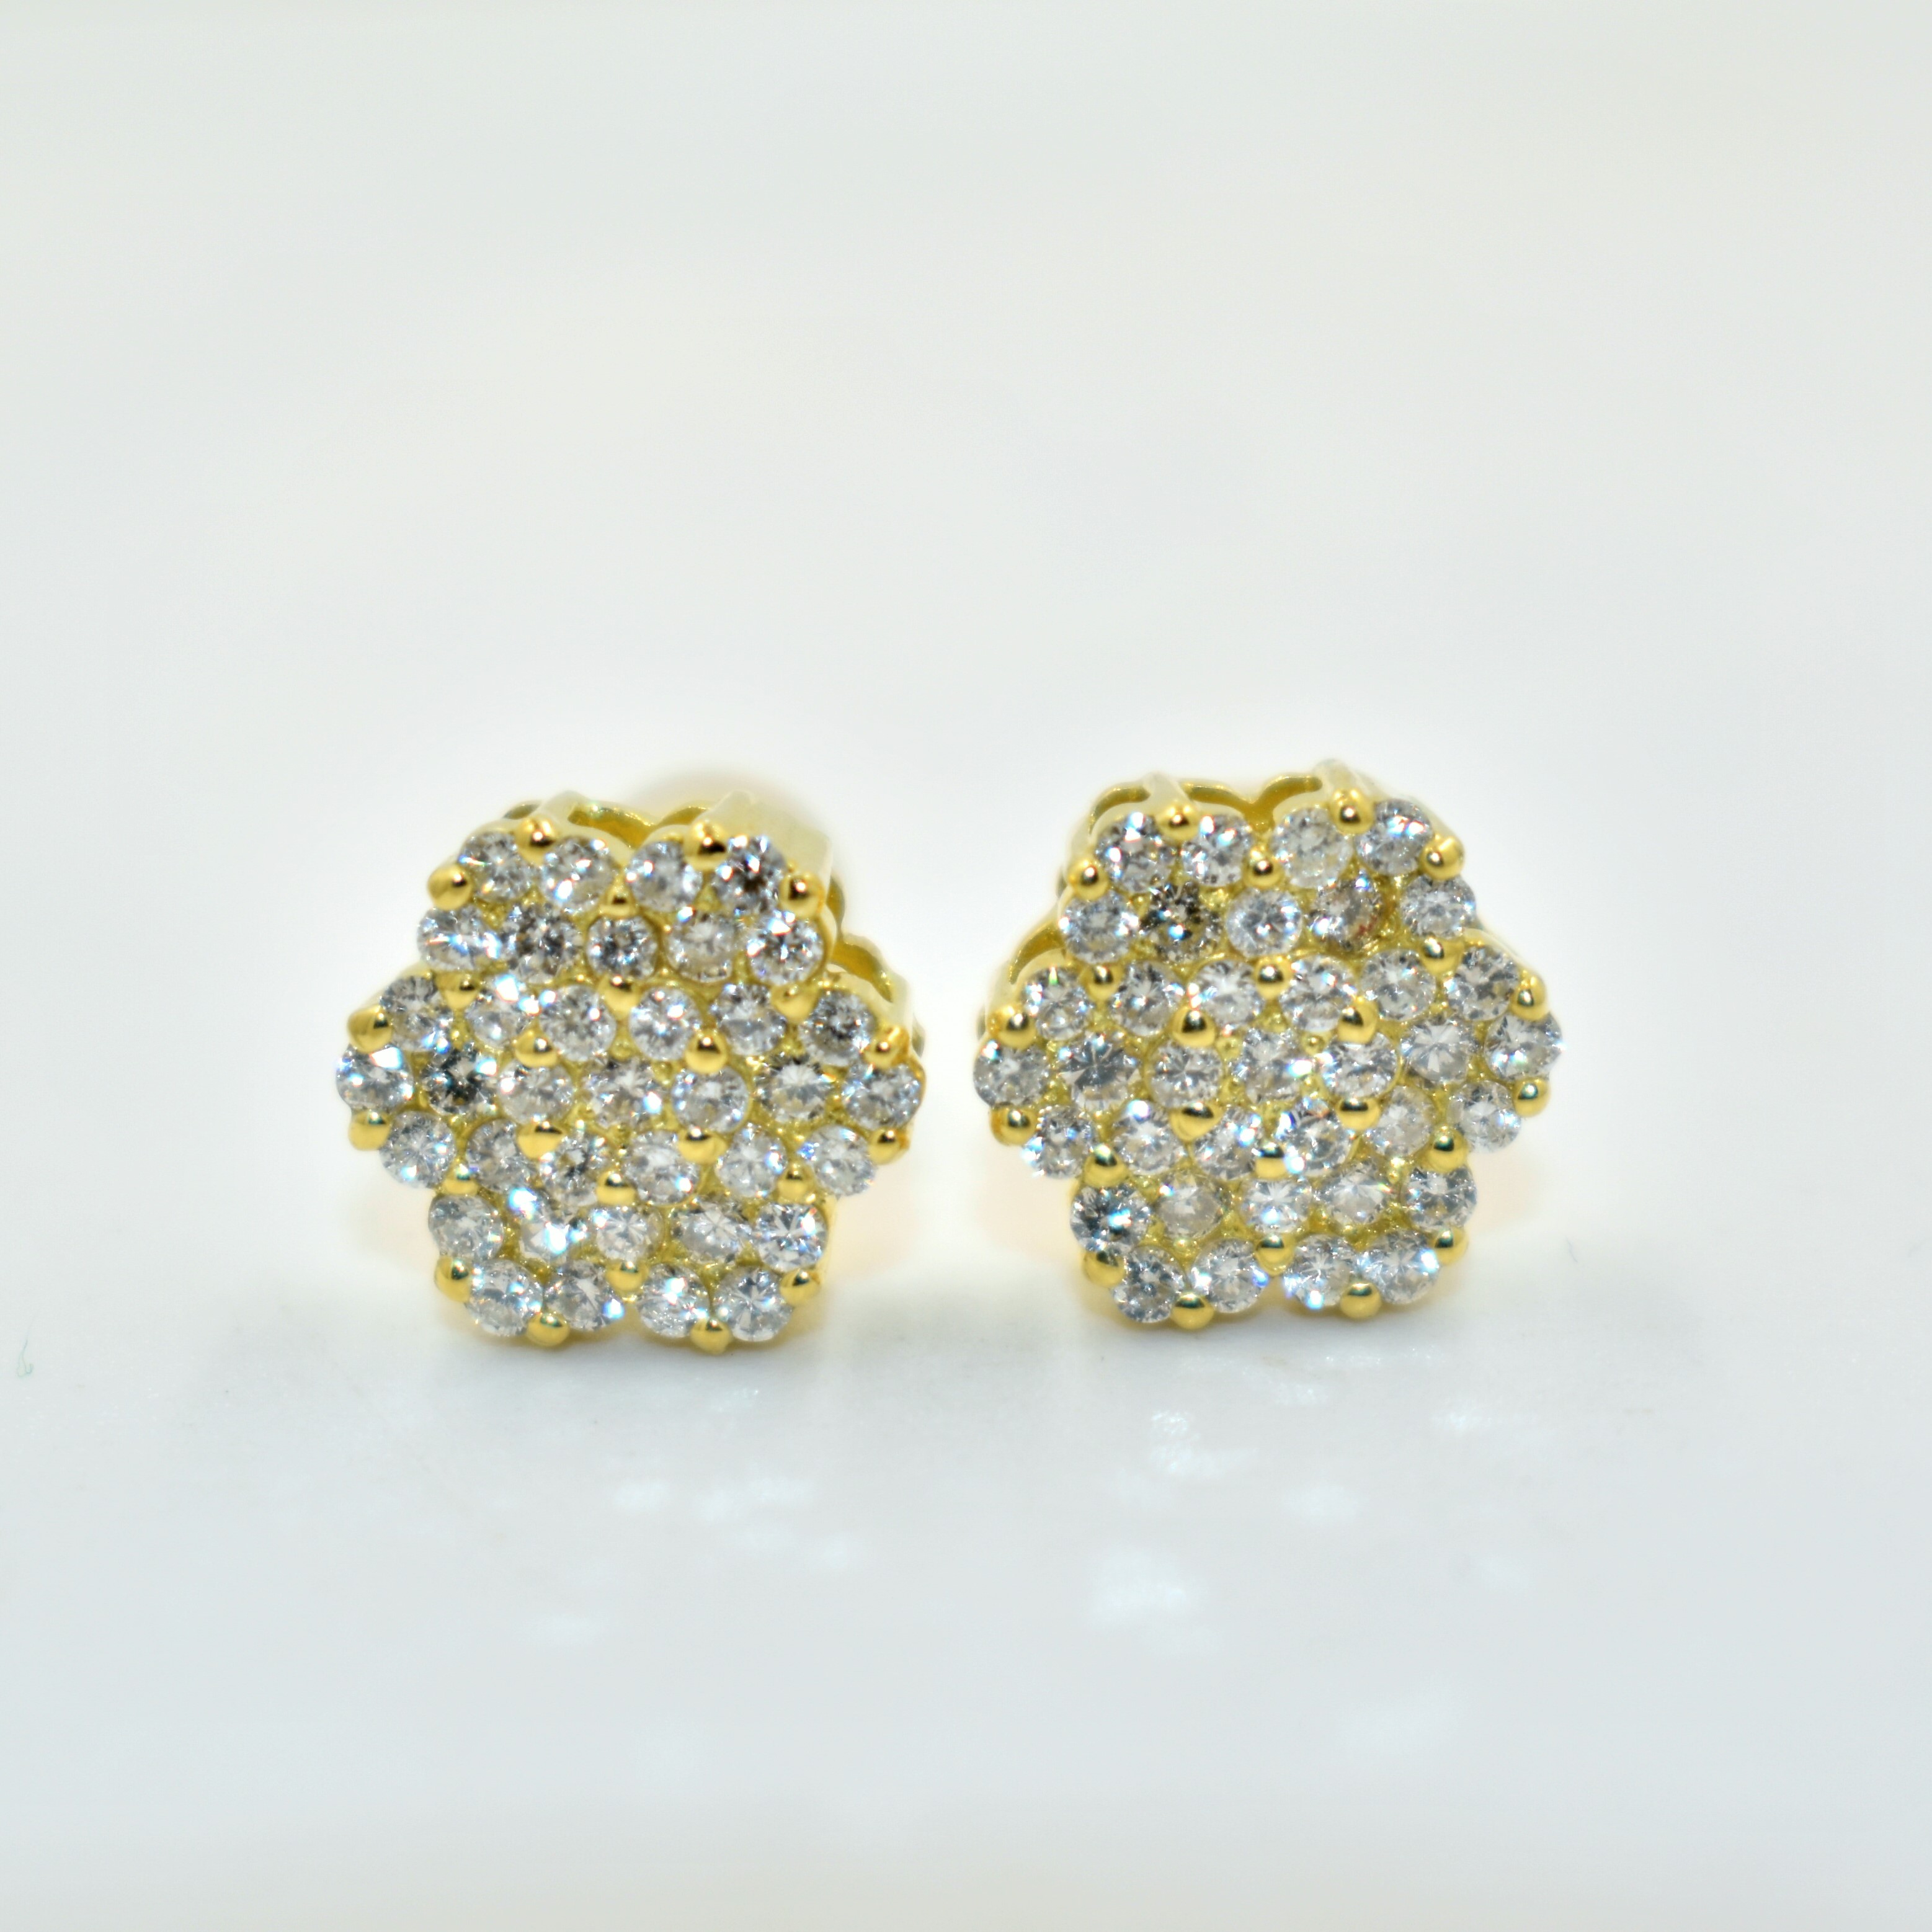 18K Yellow Gold
Diamonds: 1.00ct
Regular Price $4675
SALE $1425
Ref: GP558